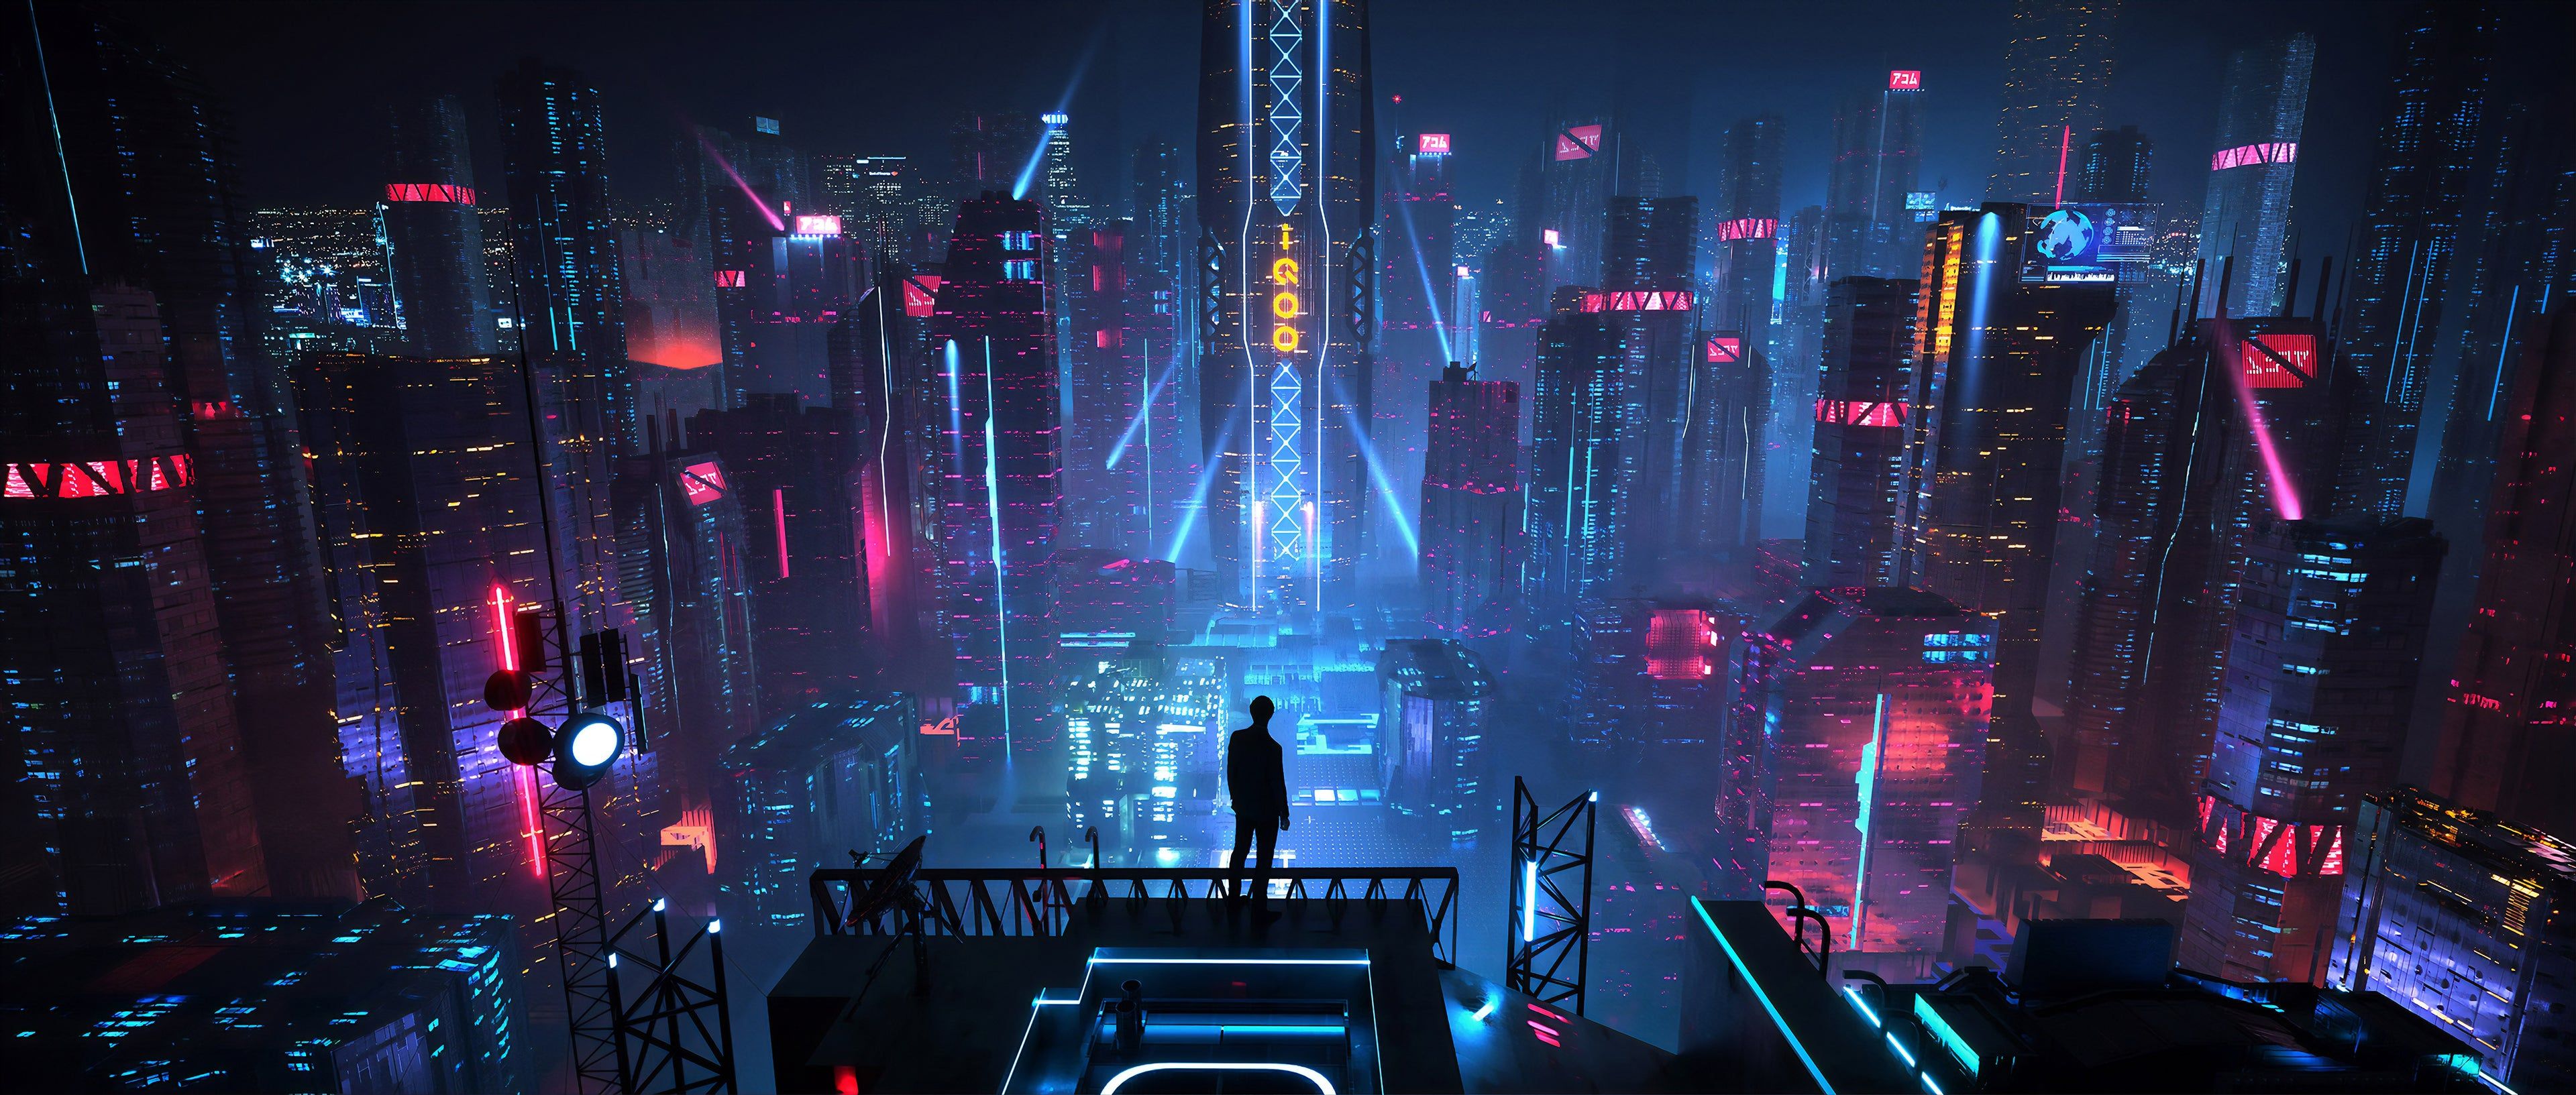 Cyberpunk City Wallpaper Fi City Night